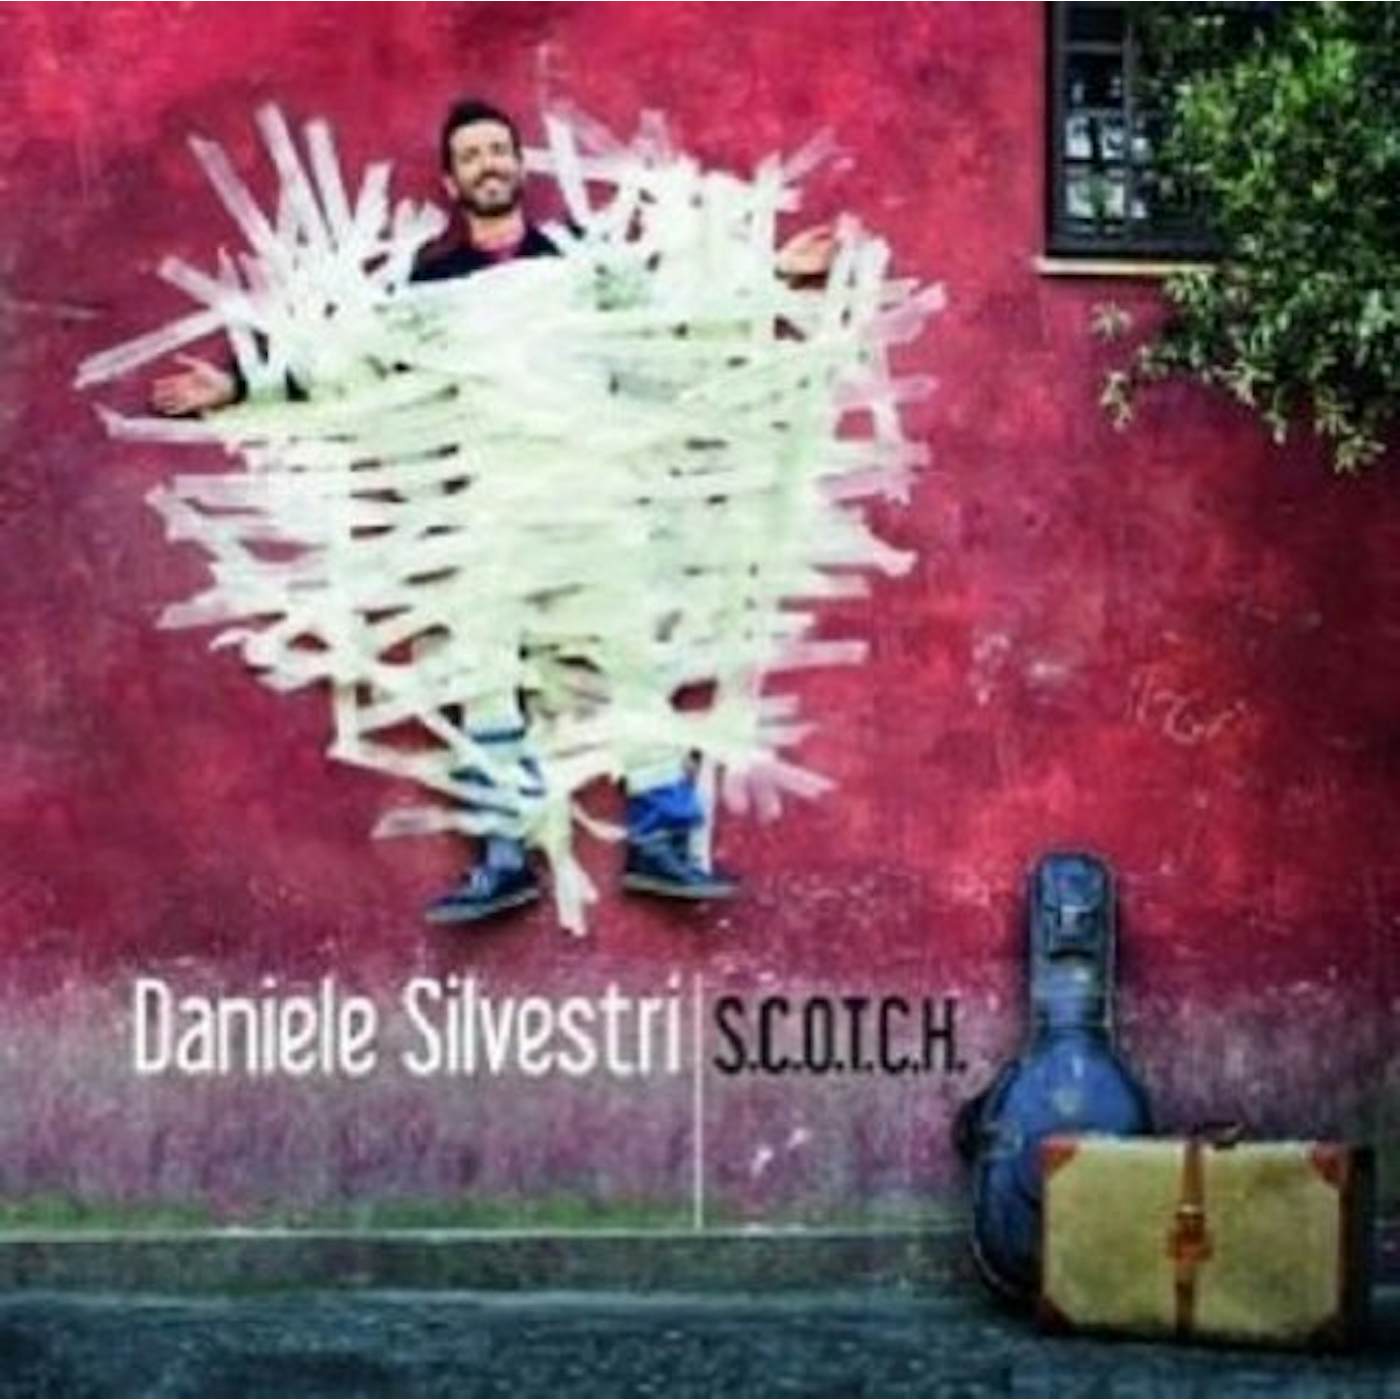 Daniele Silvestri S.C.O.T.C.CH Vinyl Record